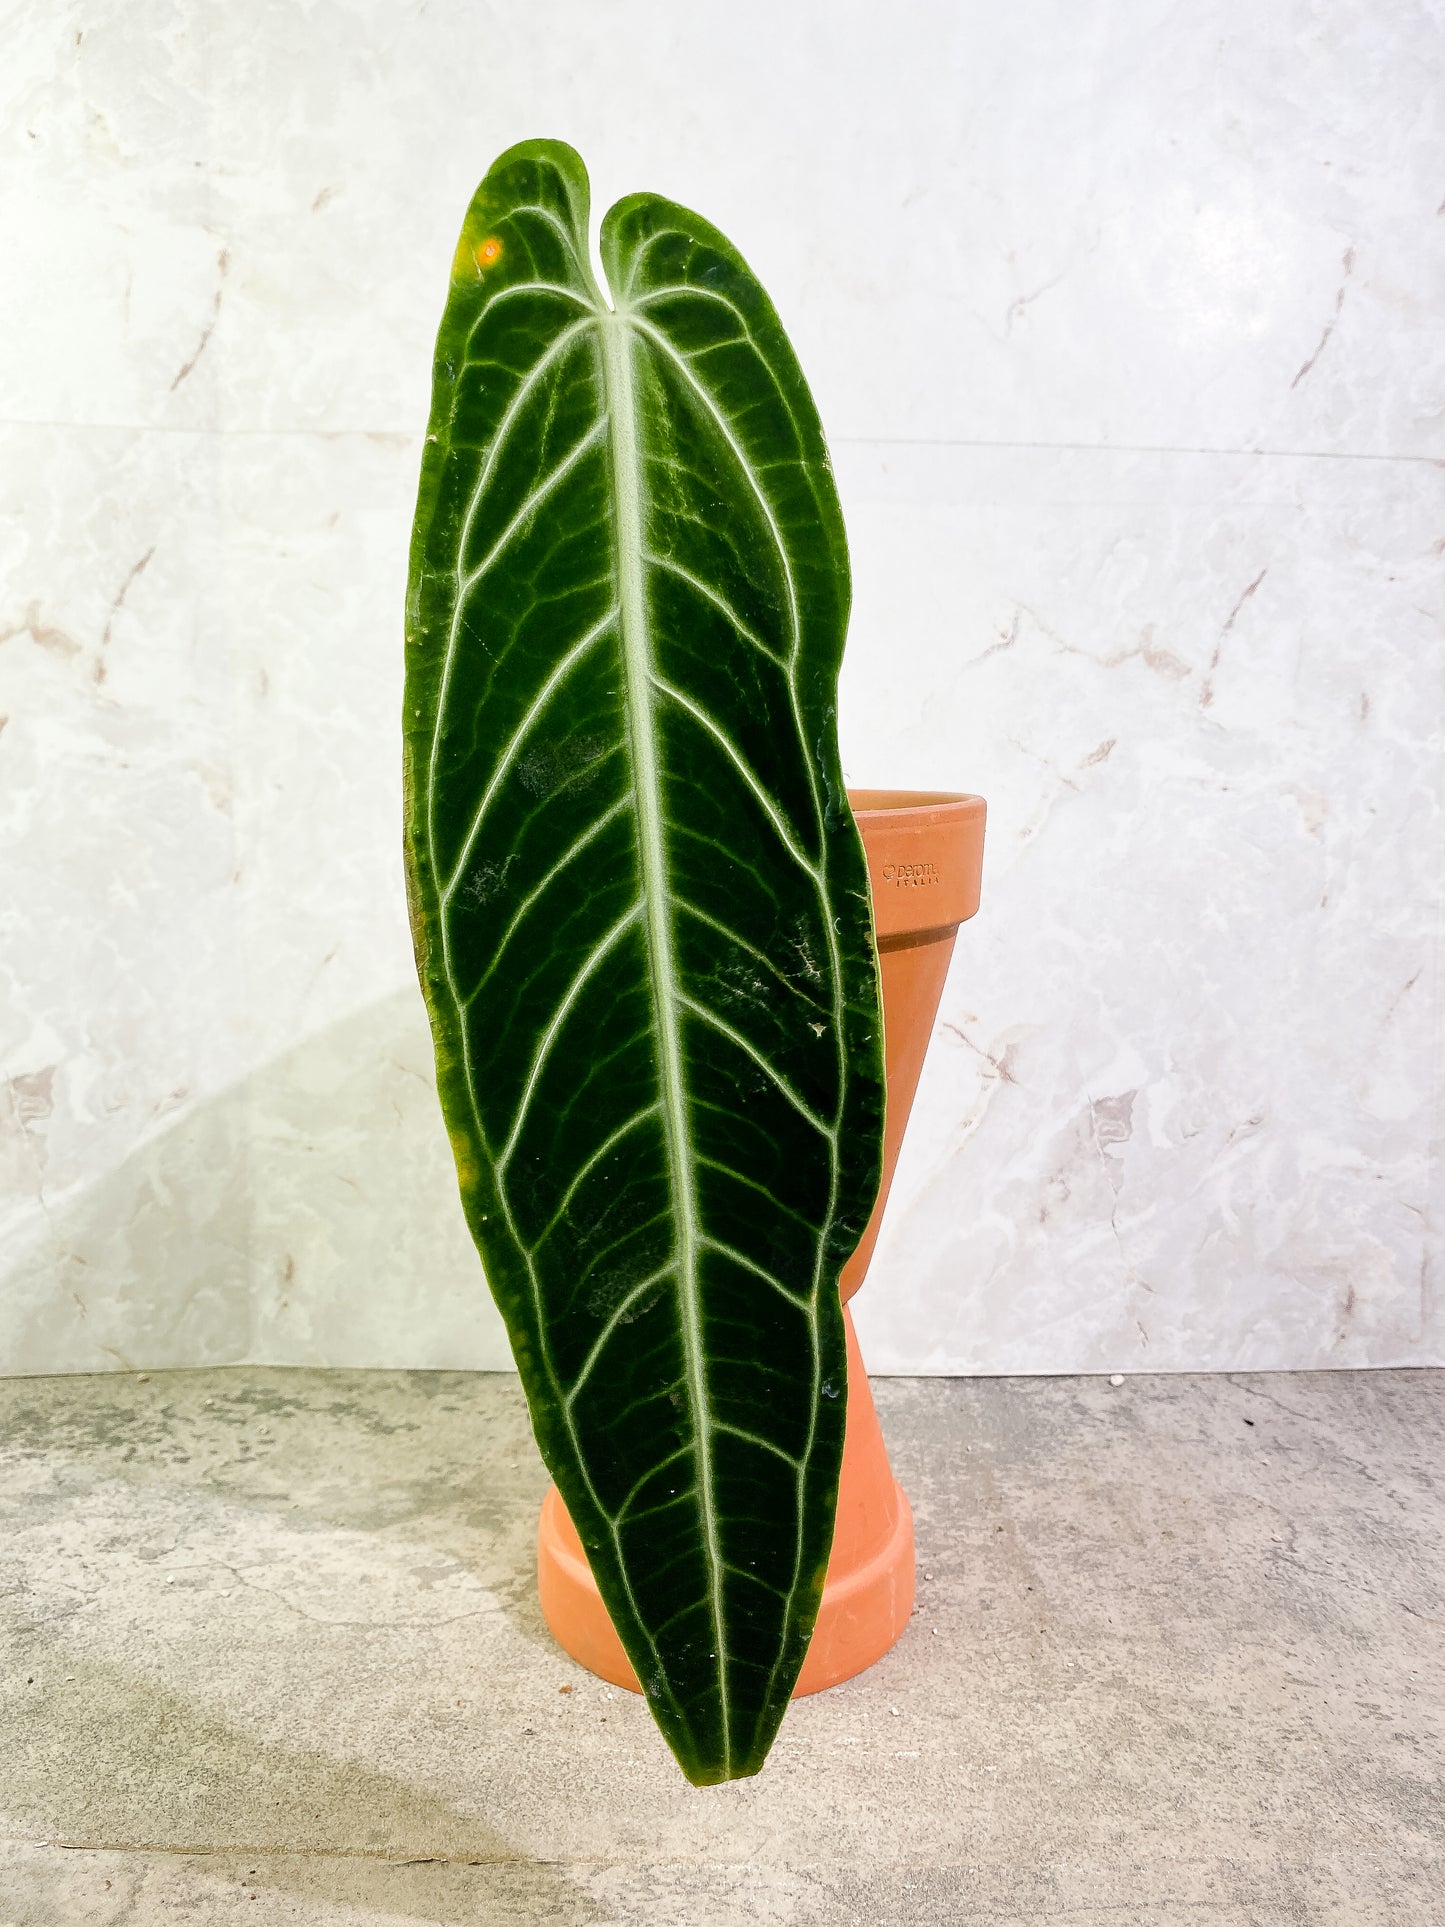 Anthurium Warocqueanum Dark Form 1 16 1/2 inch leaf, 1 sprout fully rooted